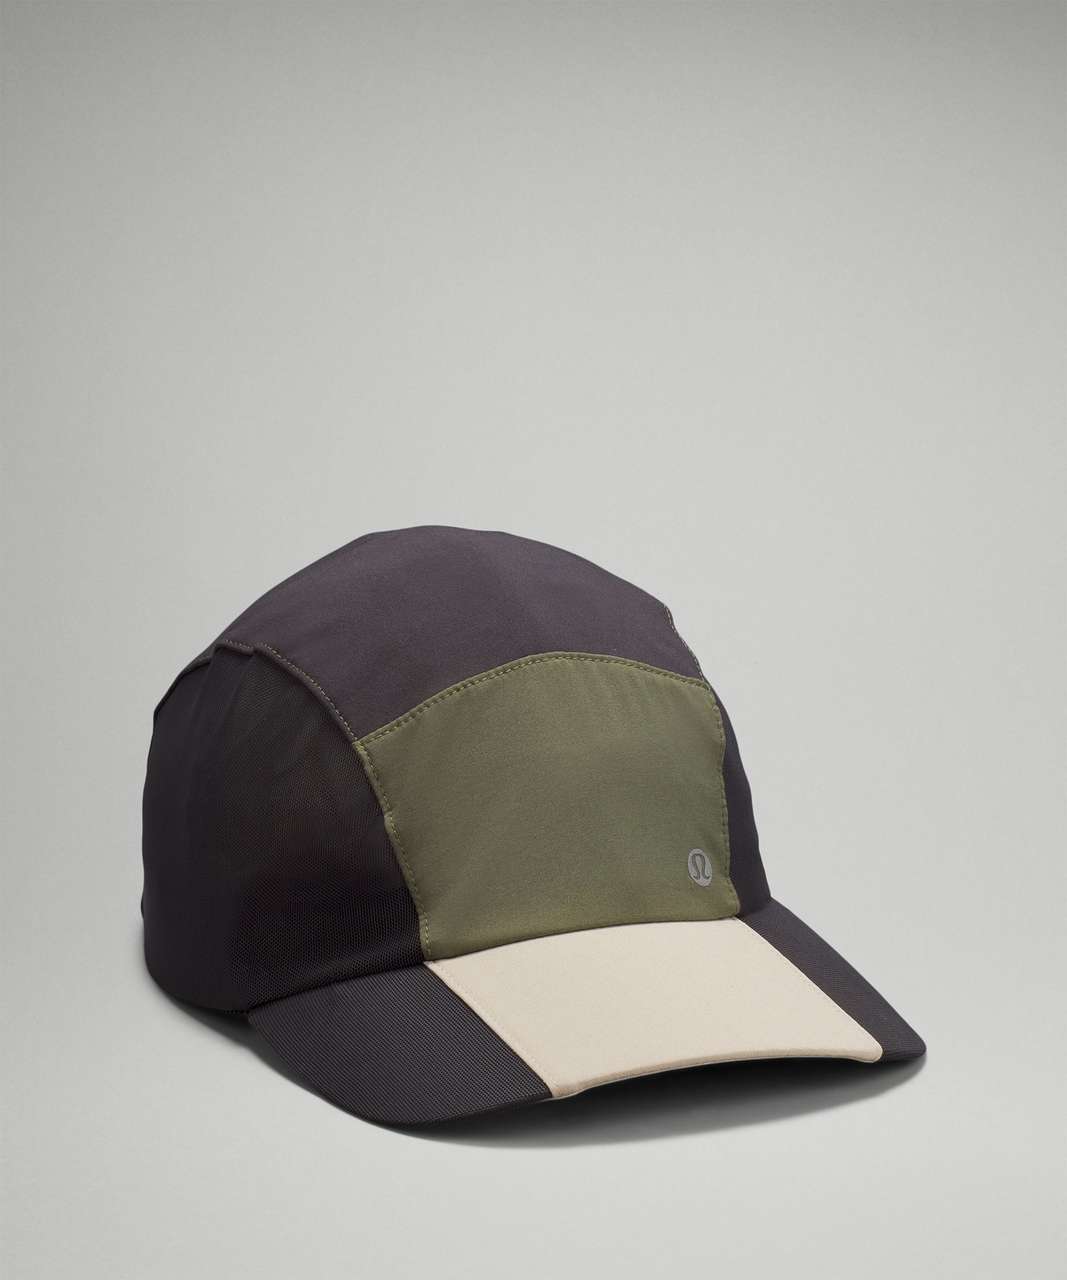 Lululemon Mens Fast and Free Running Hat Elite - Graphite Grey / Medium Olive / Raw Linen